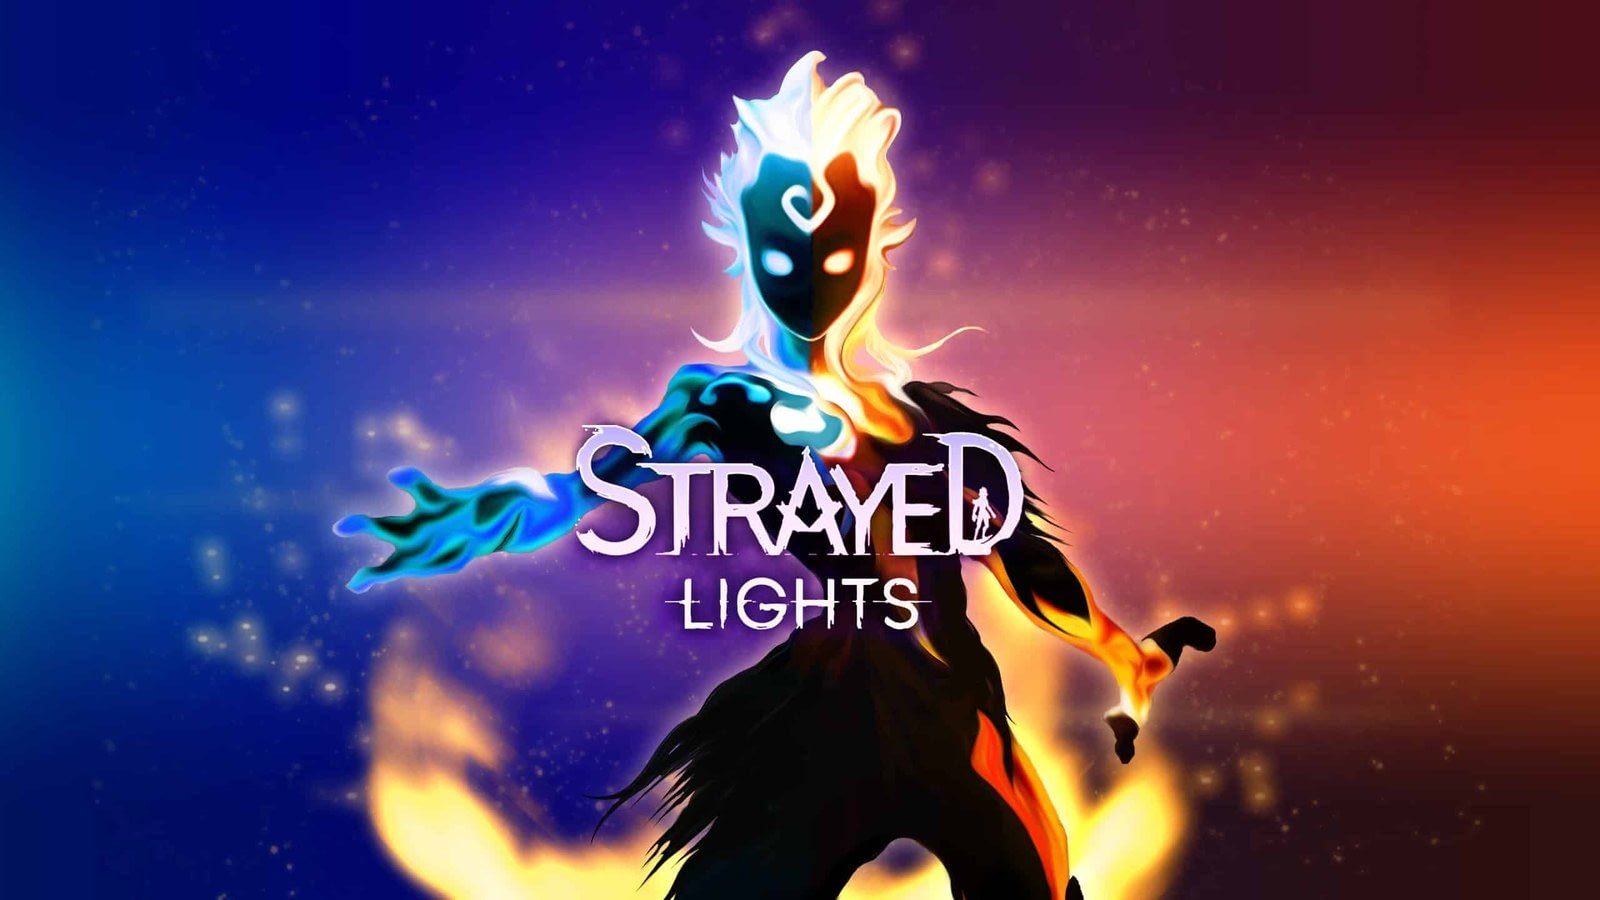 Strayed-lights-cover art work